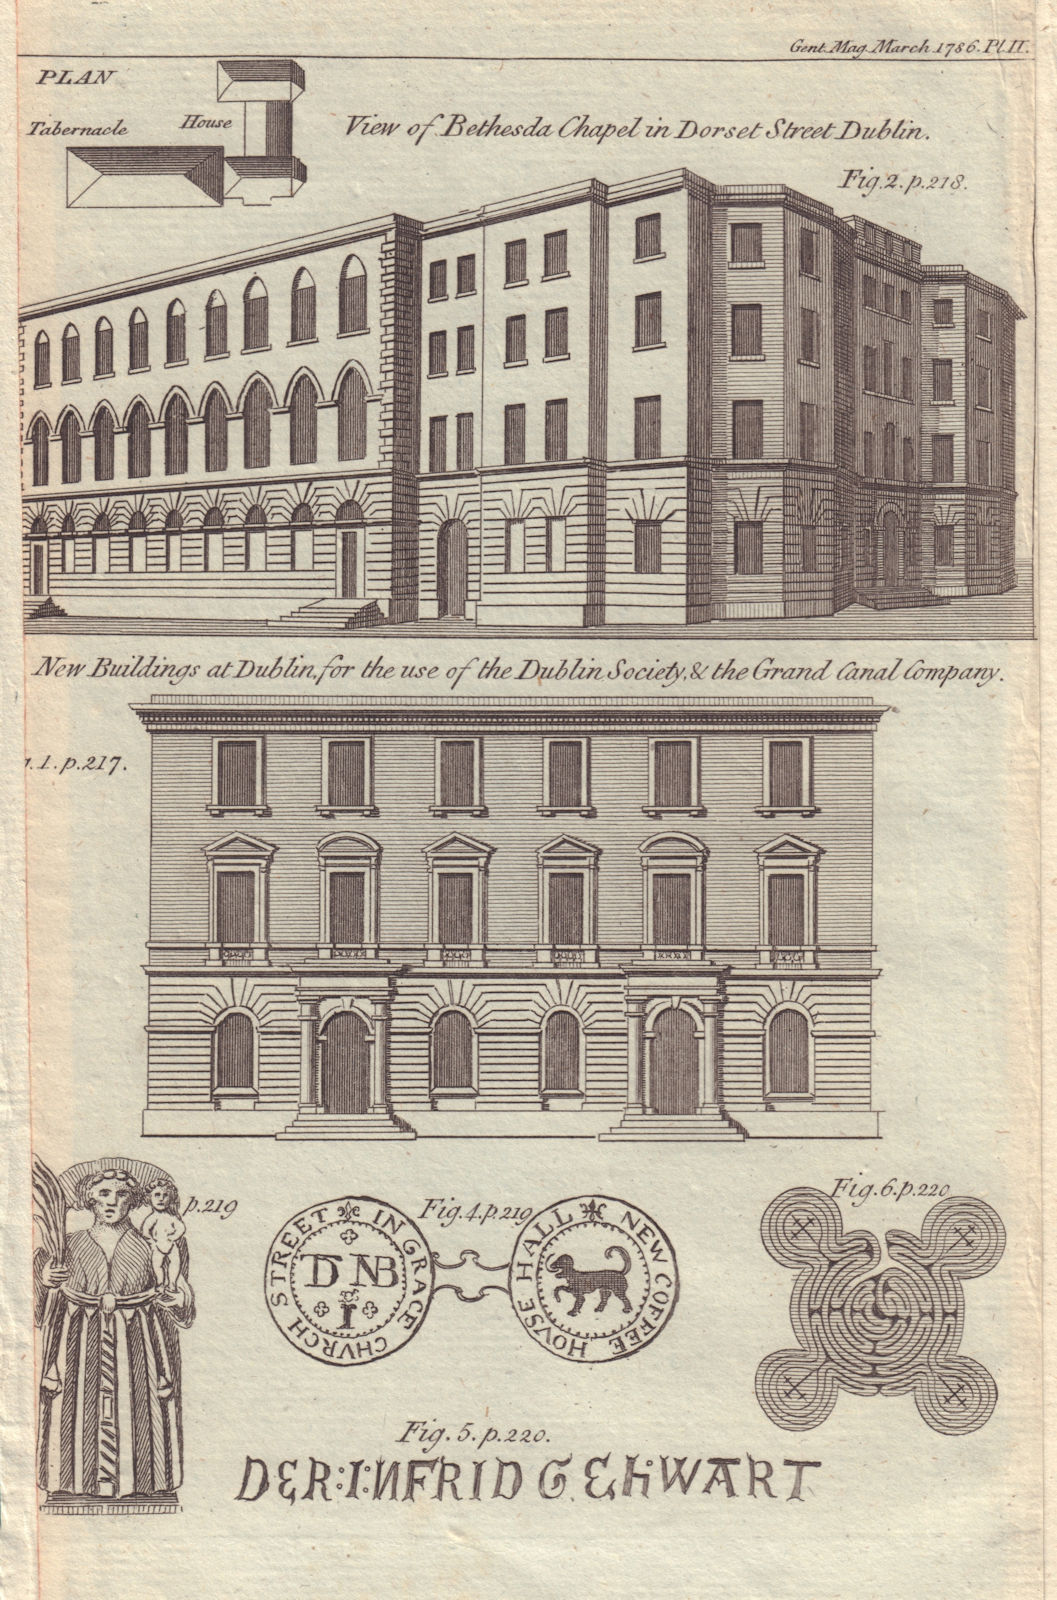 Dublin Society 112-113 Grafton Street. Bethesda Chapel, Dorset Street 1786